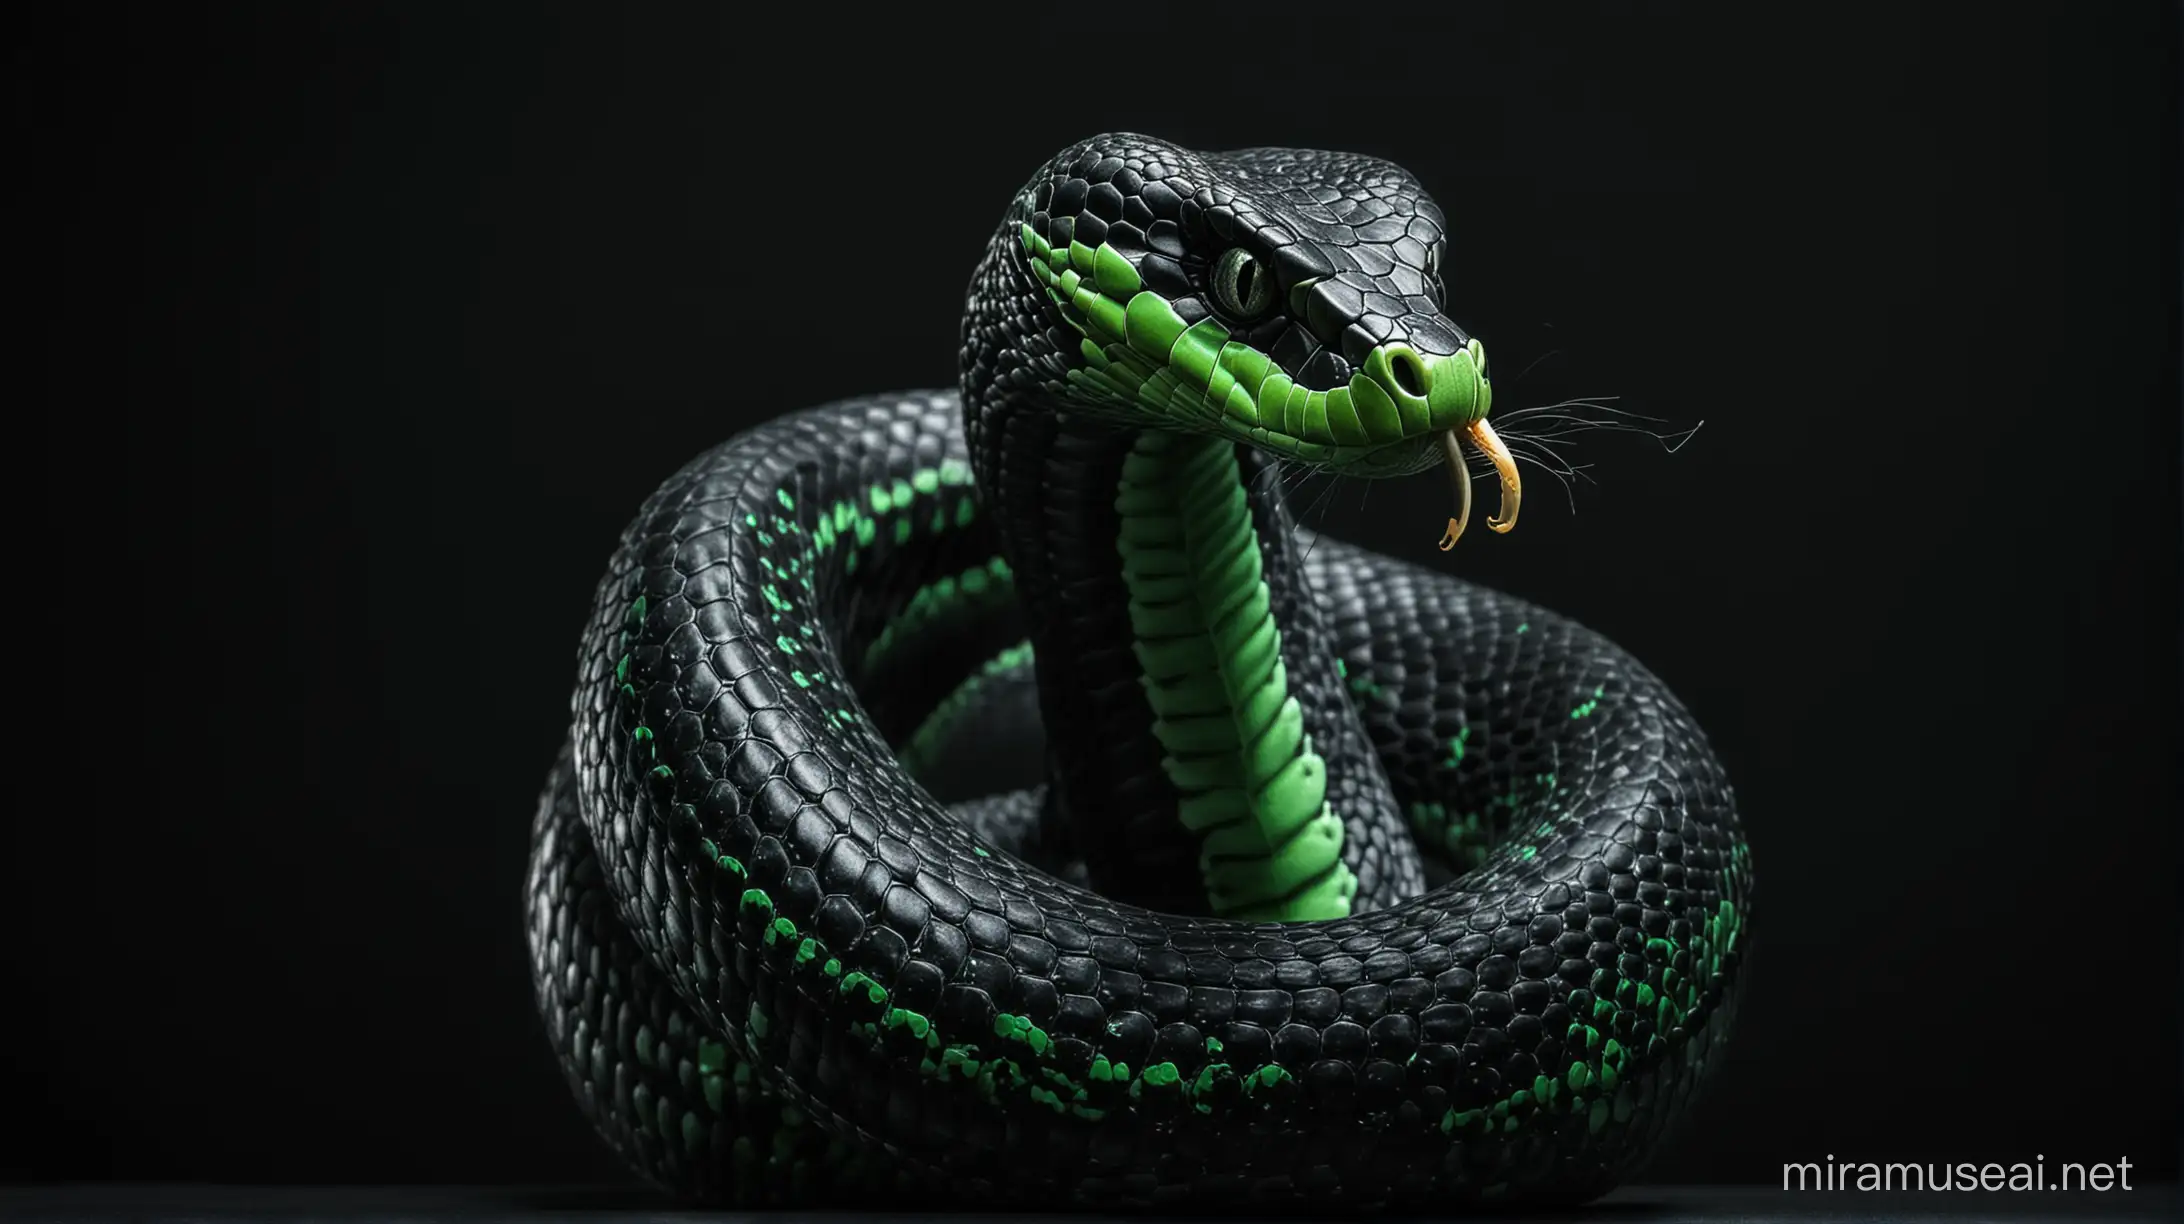 Black and Green Cobra Snake on Dark Background